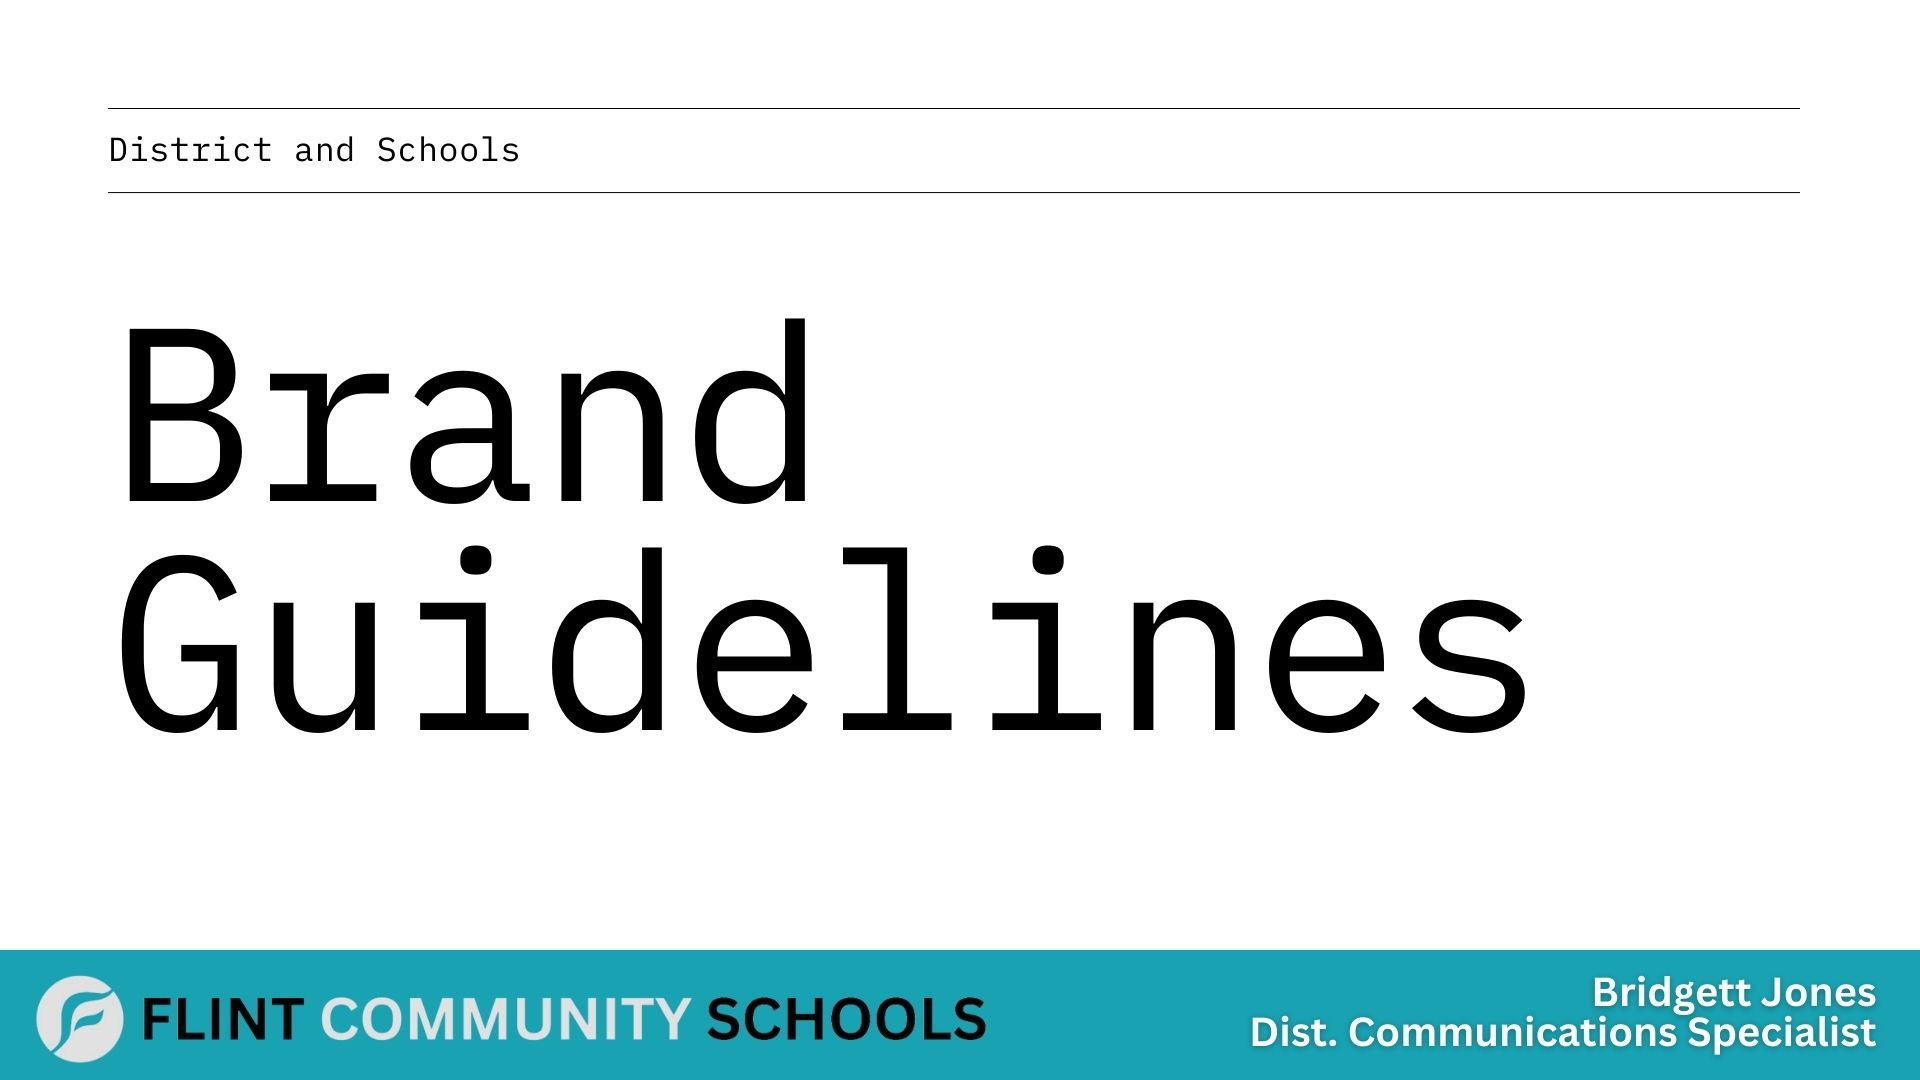 Flint Community Schools Branding Guidelines Image